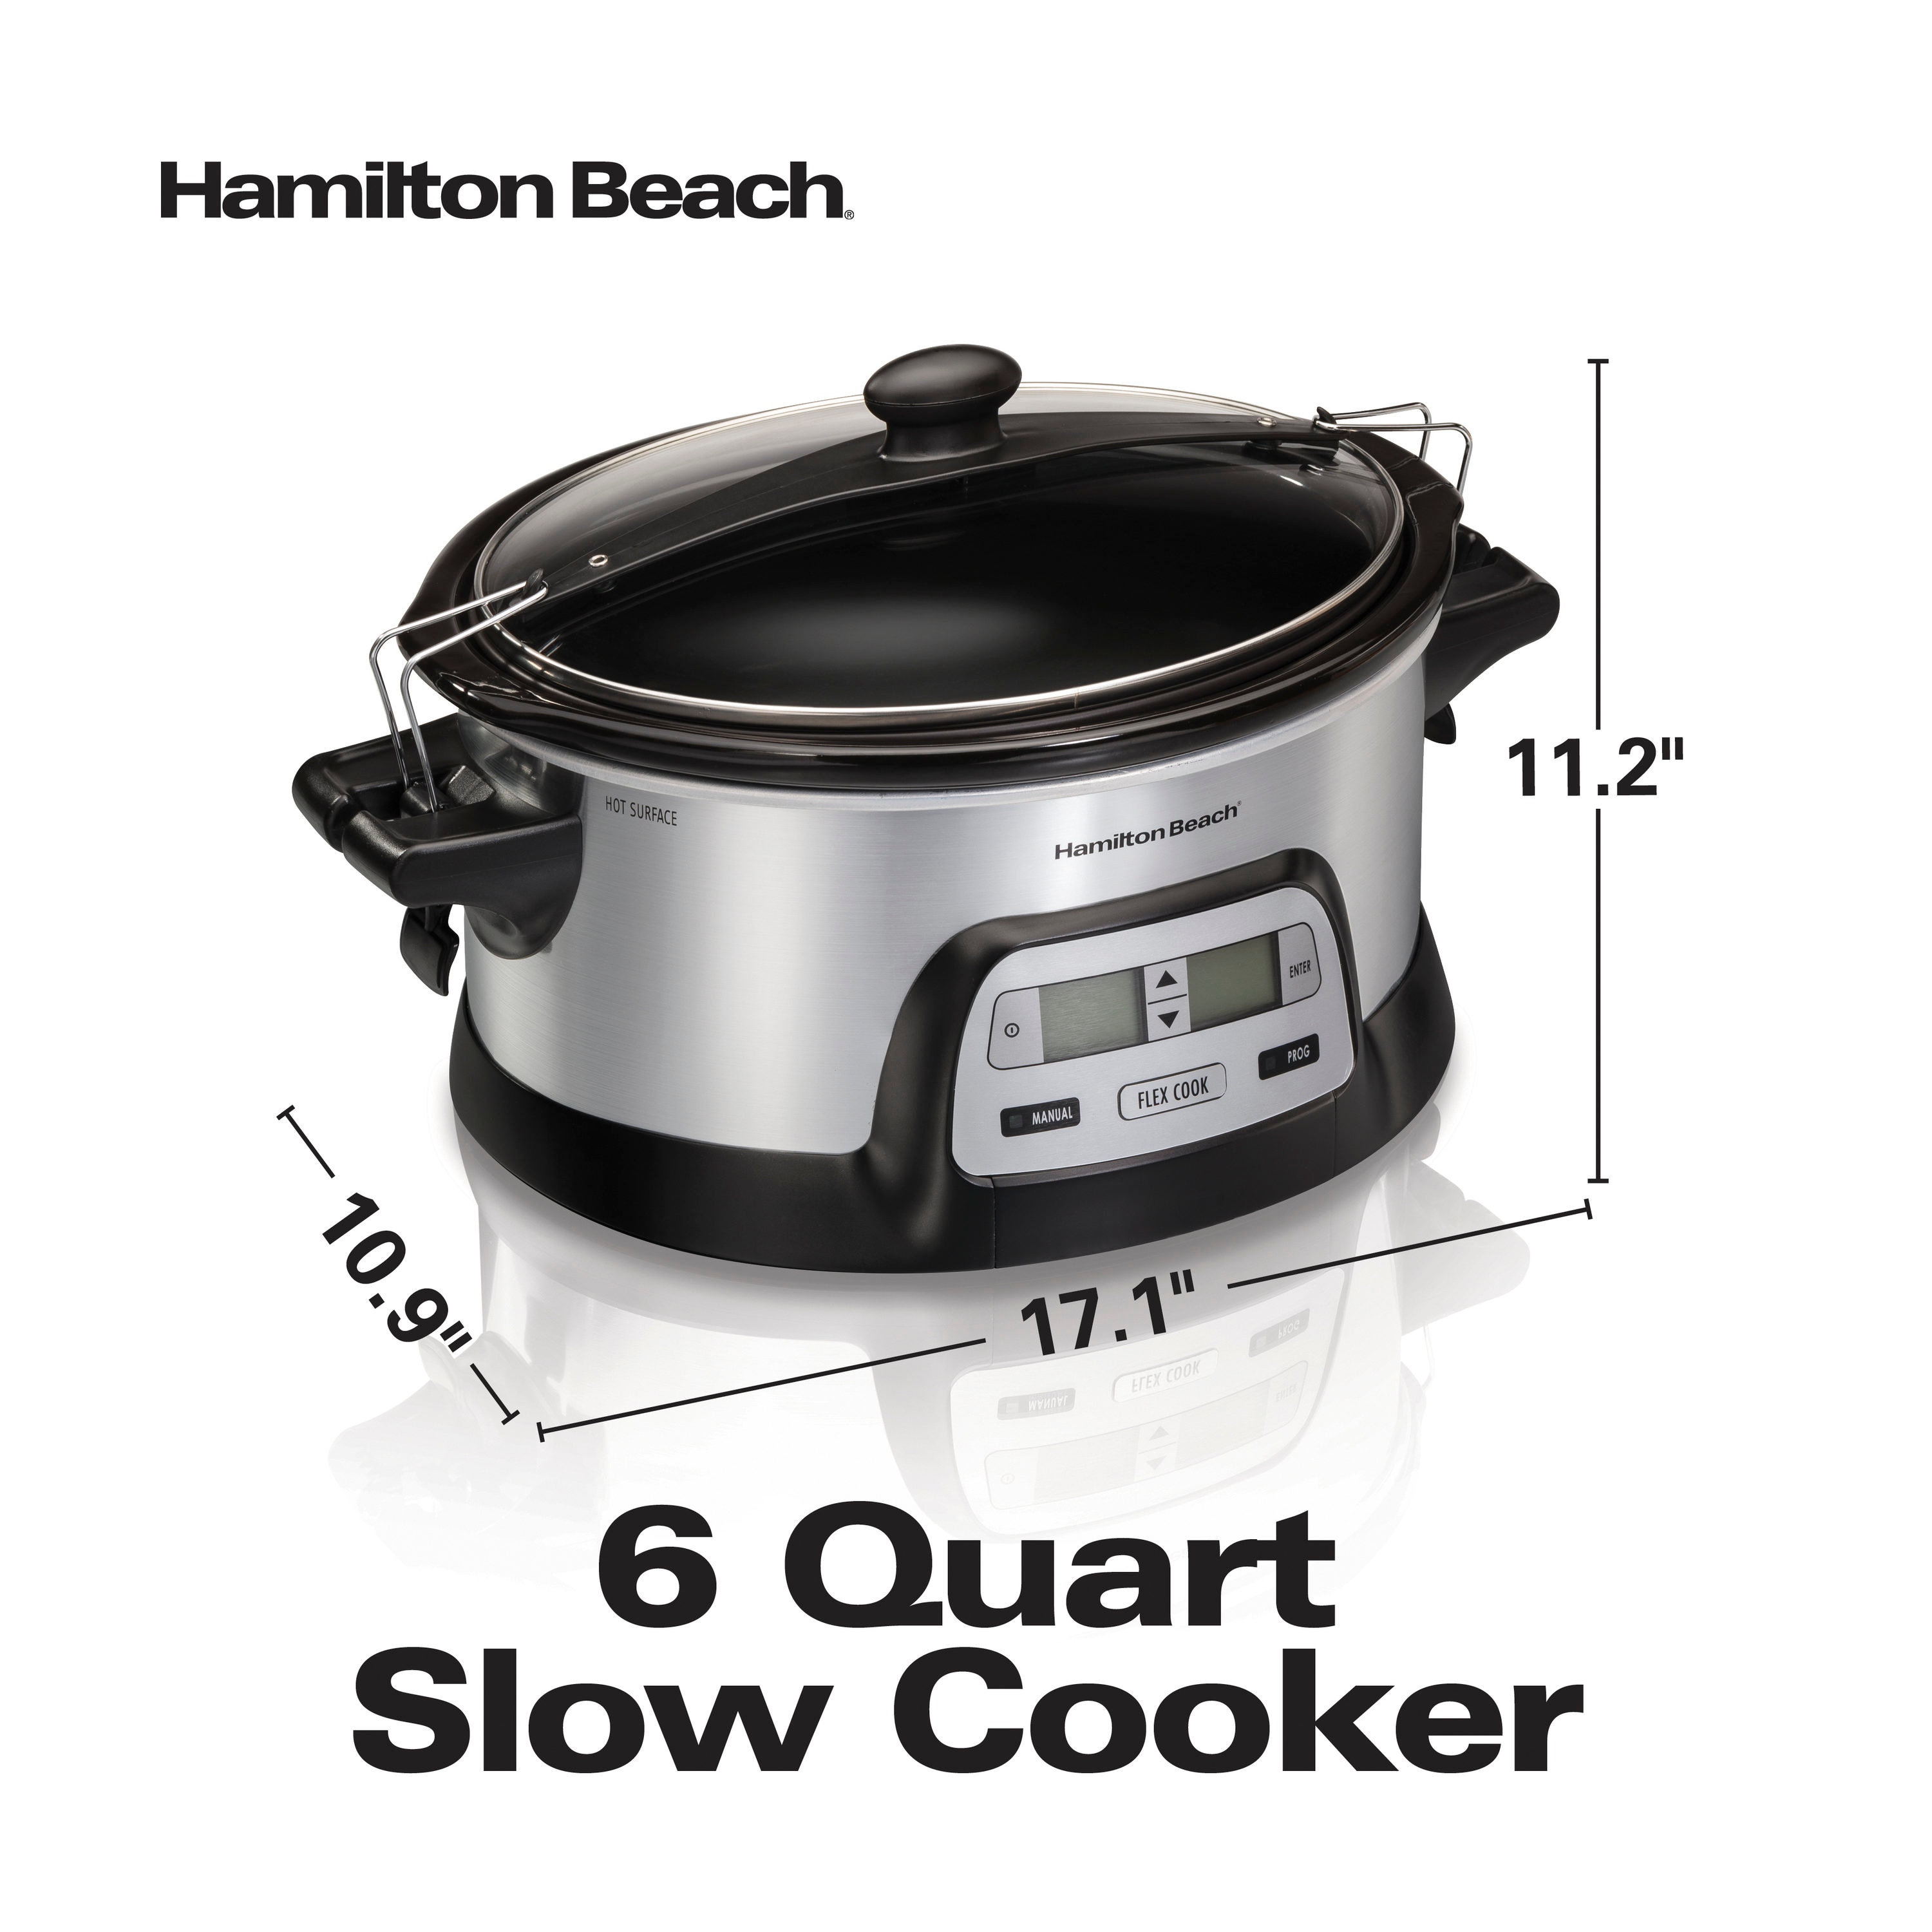 Cooks 6 Quart Slow Cooker